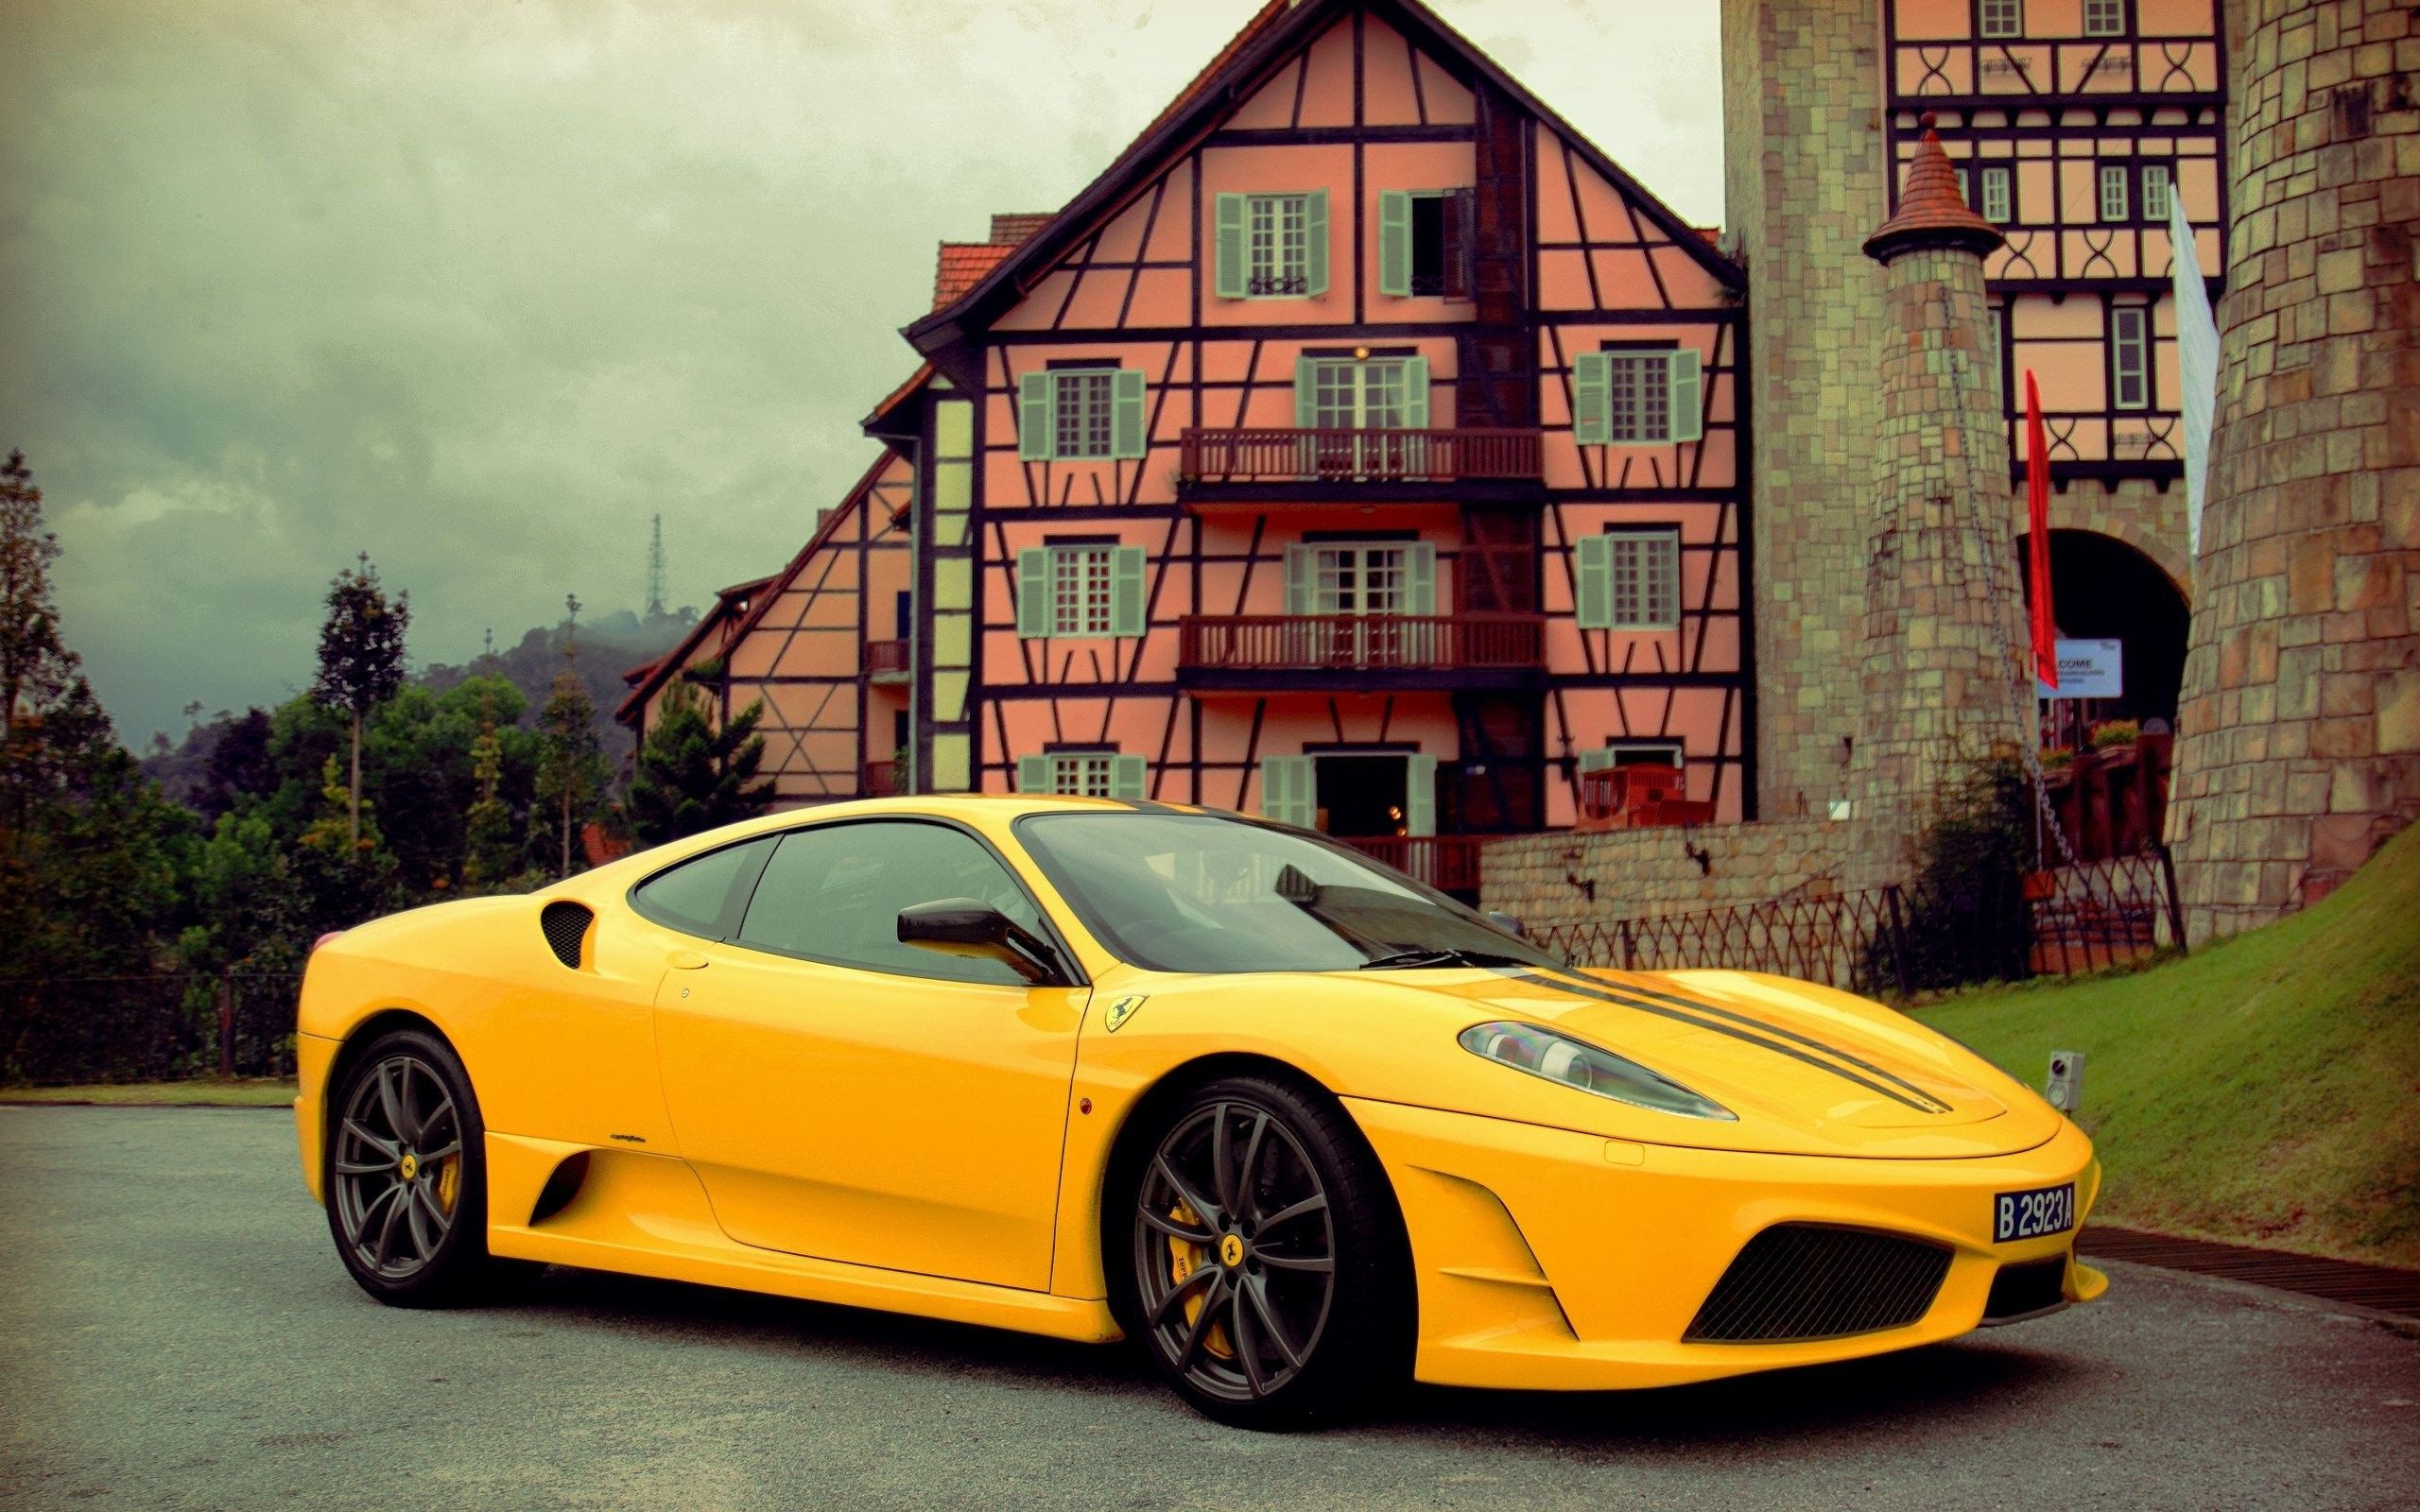 Ferrari F430 Yellow - image #76